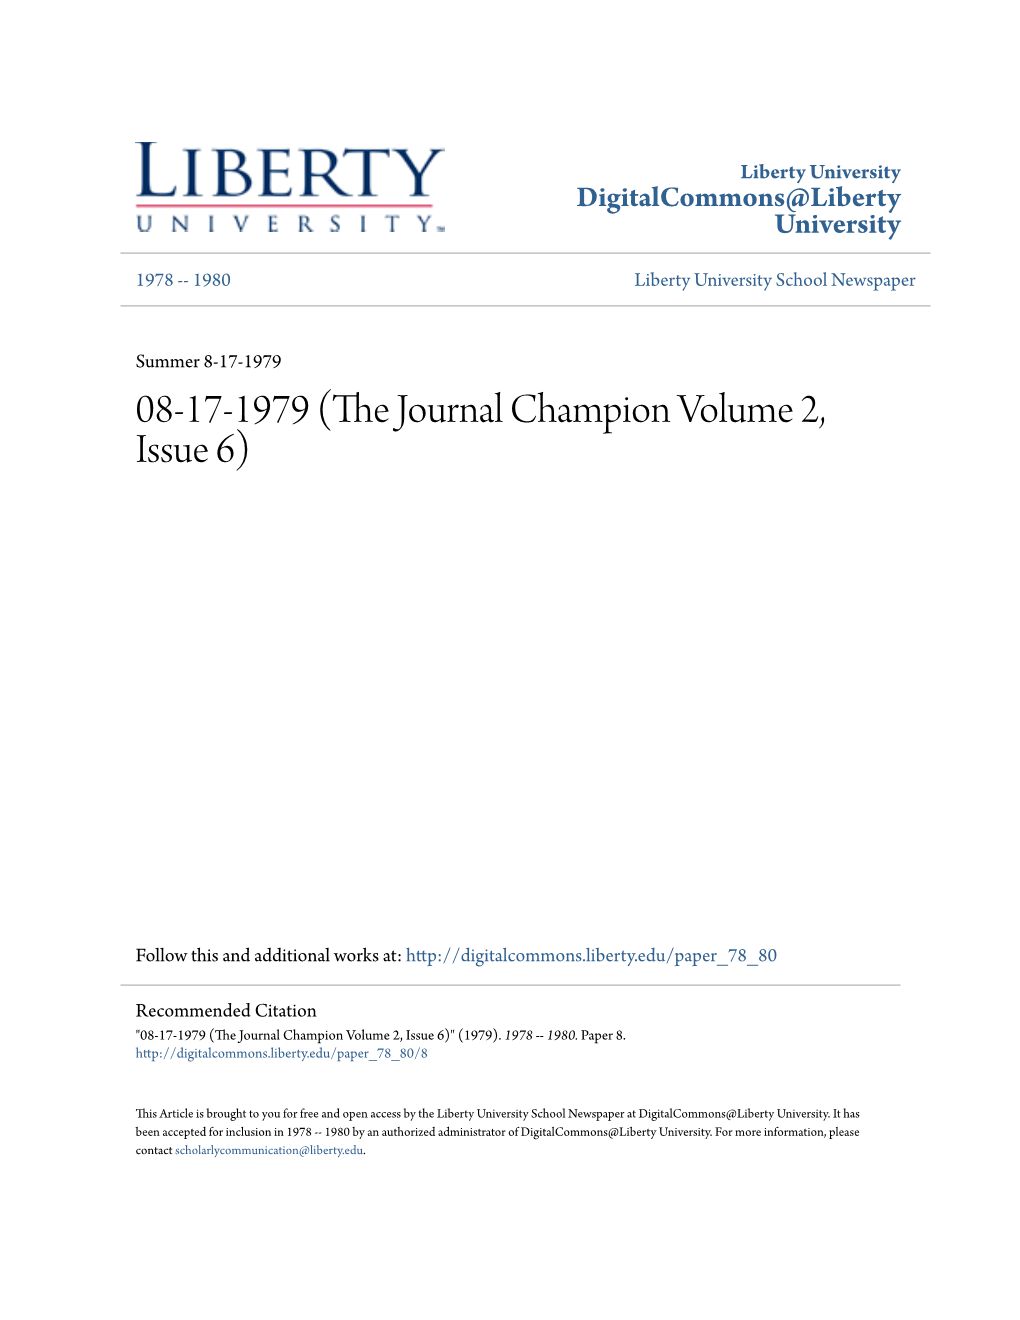 08-17-1979 (The Journal Champion Volume 2, Issue 6)